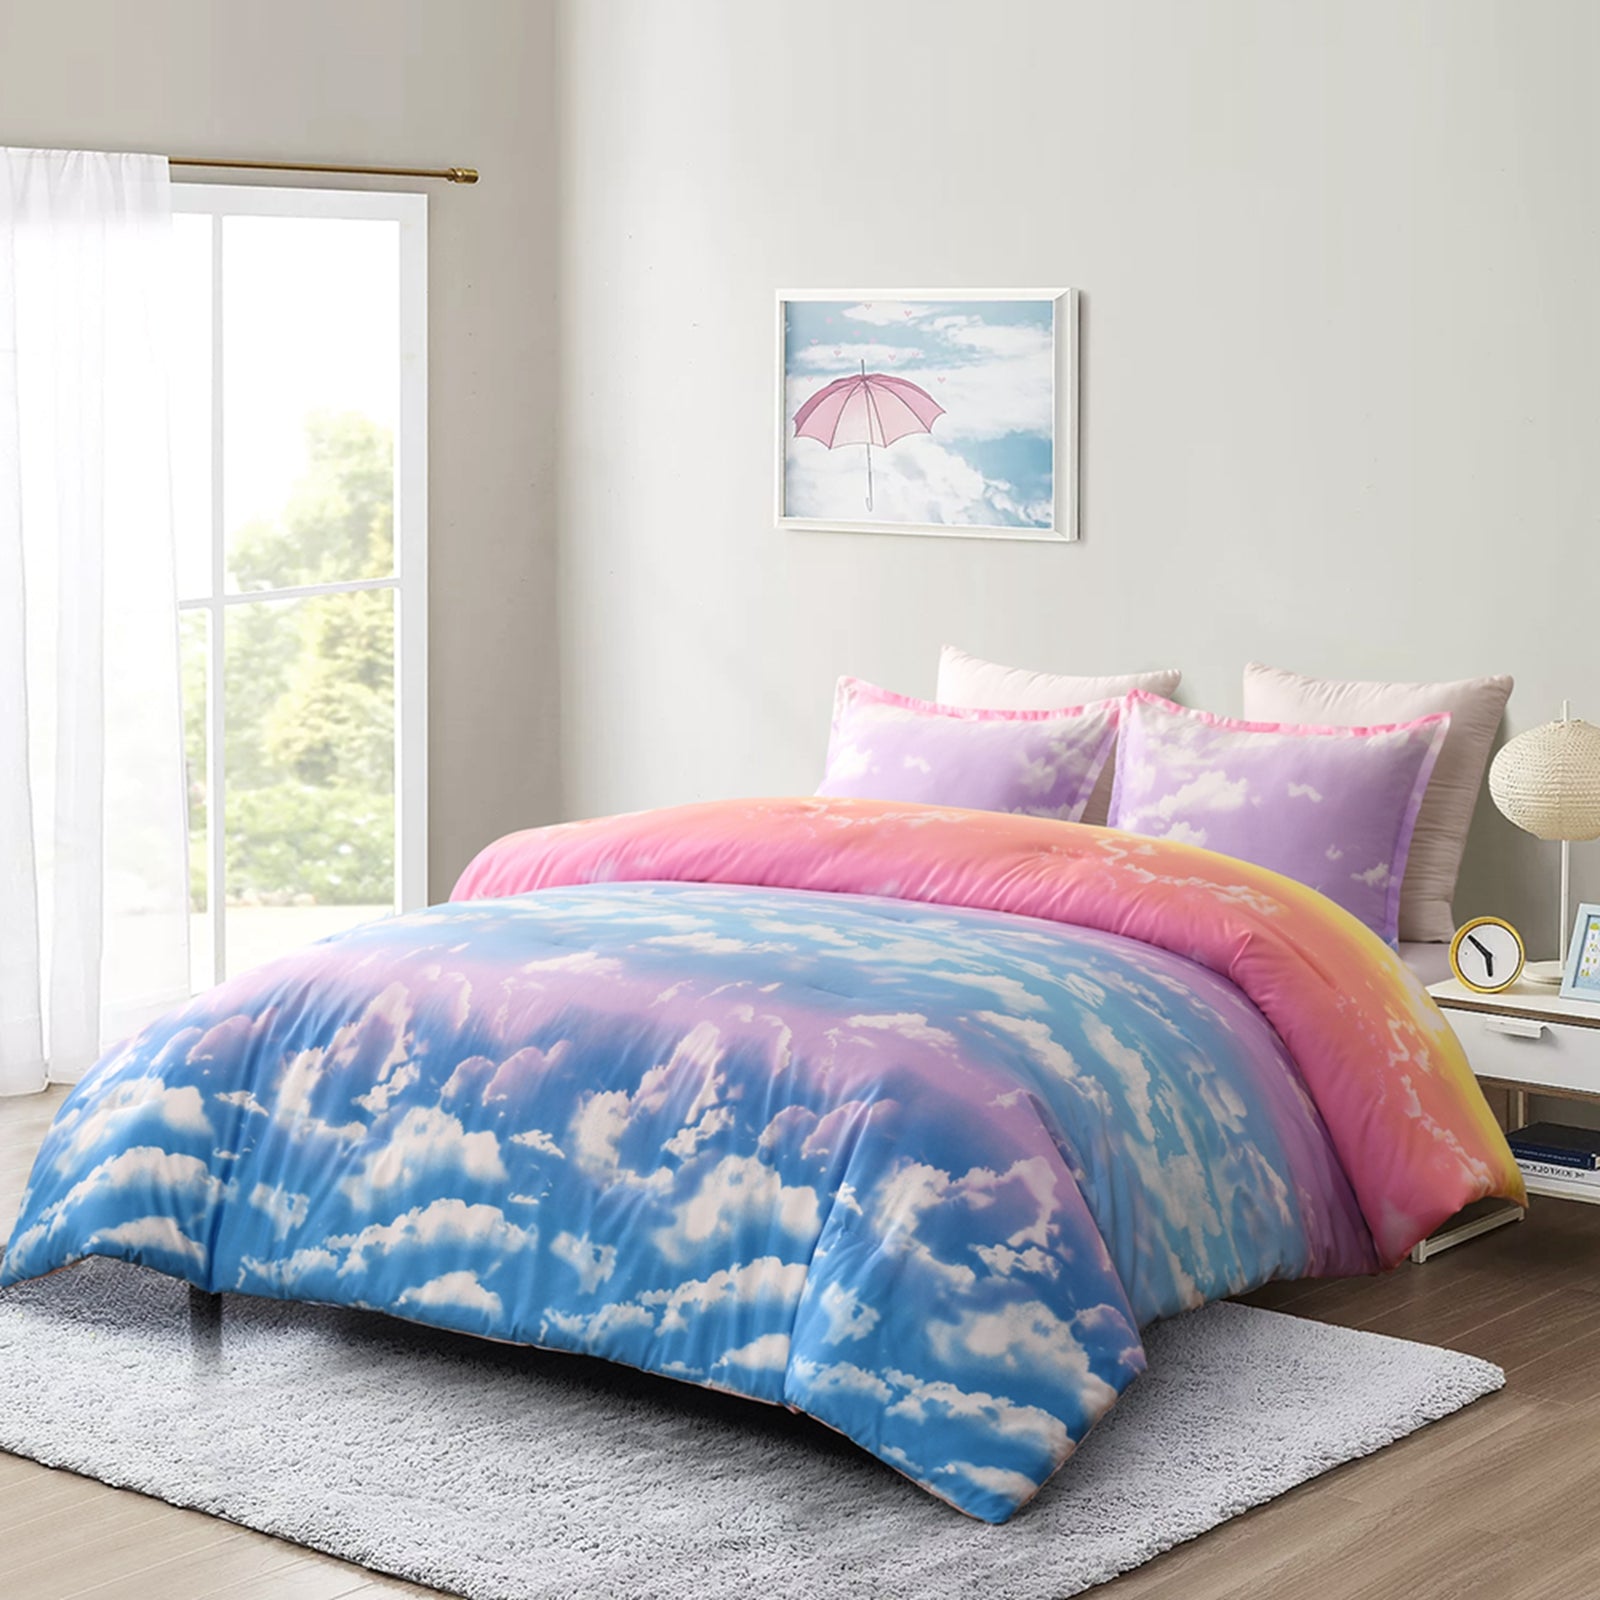 Shatex 3 Piece Kids Comforter Bedding Set - All Season Bedding Comforter Set, Super Soft Polyester Cute Bedding Comforter